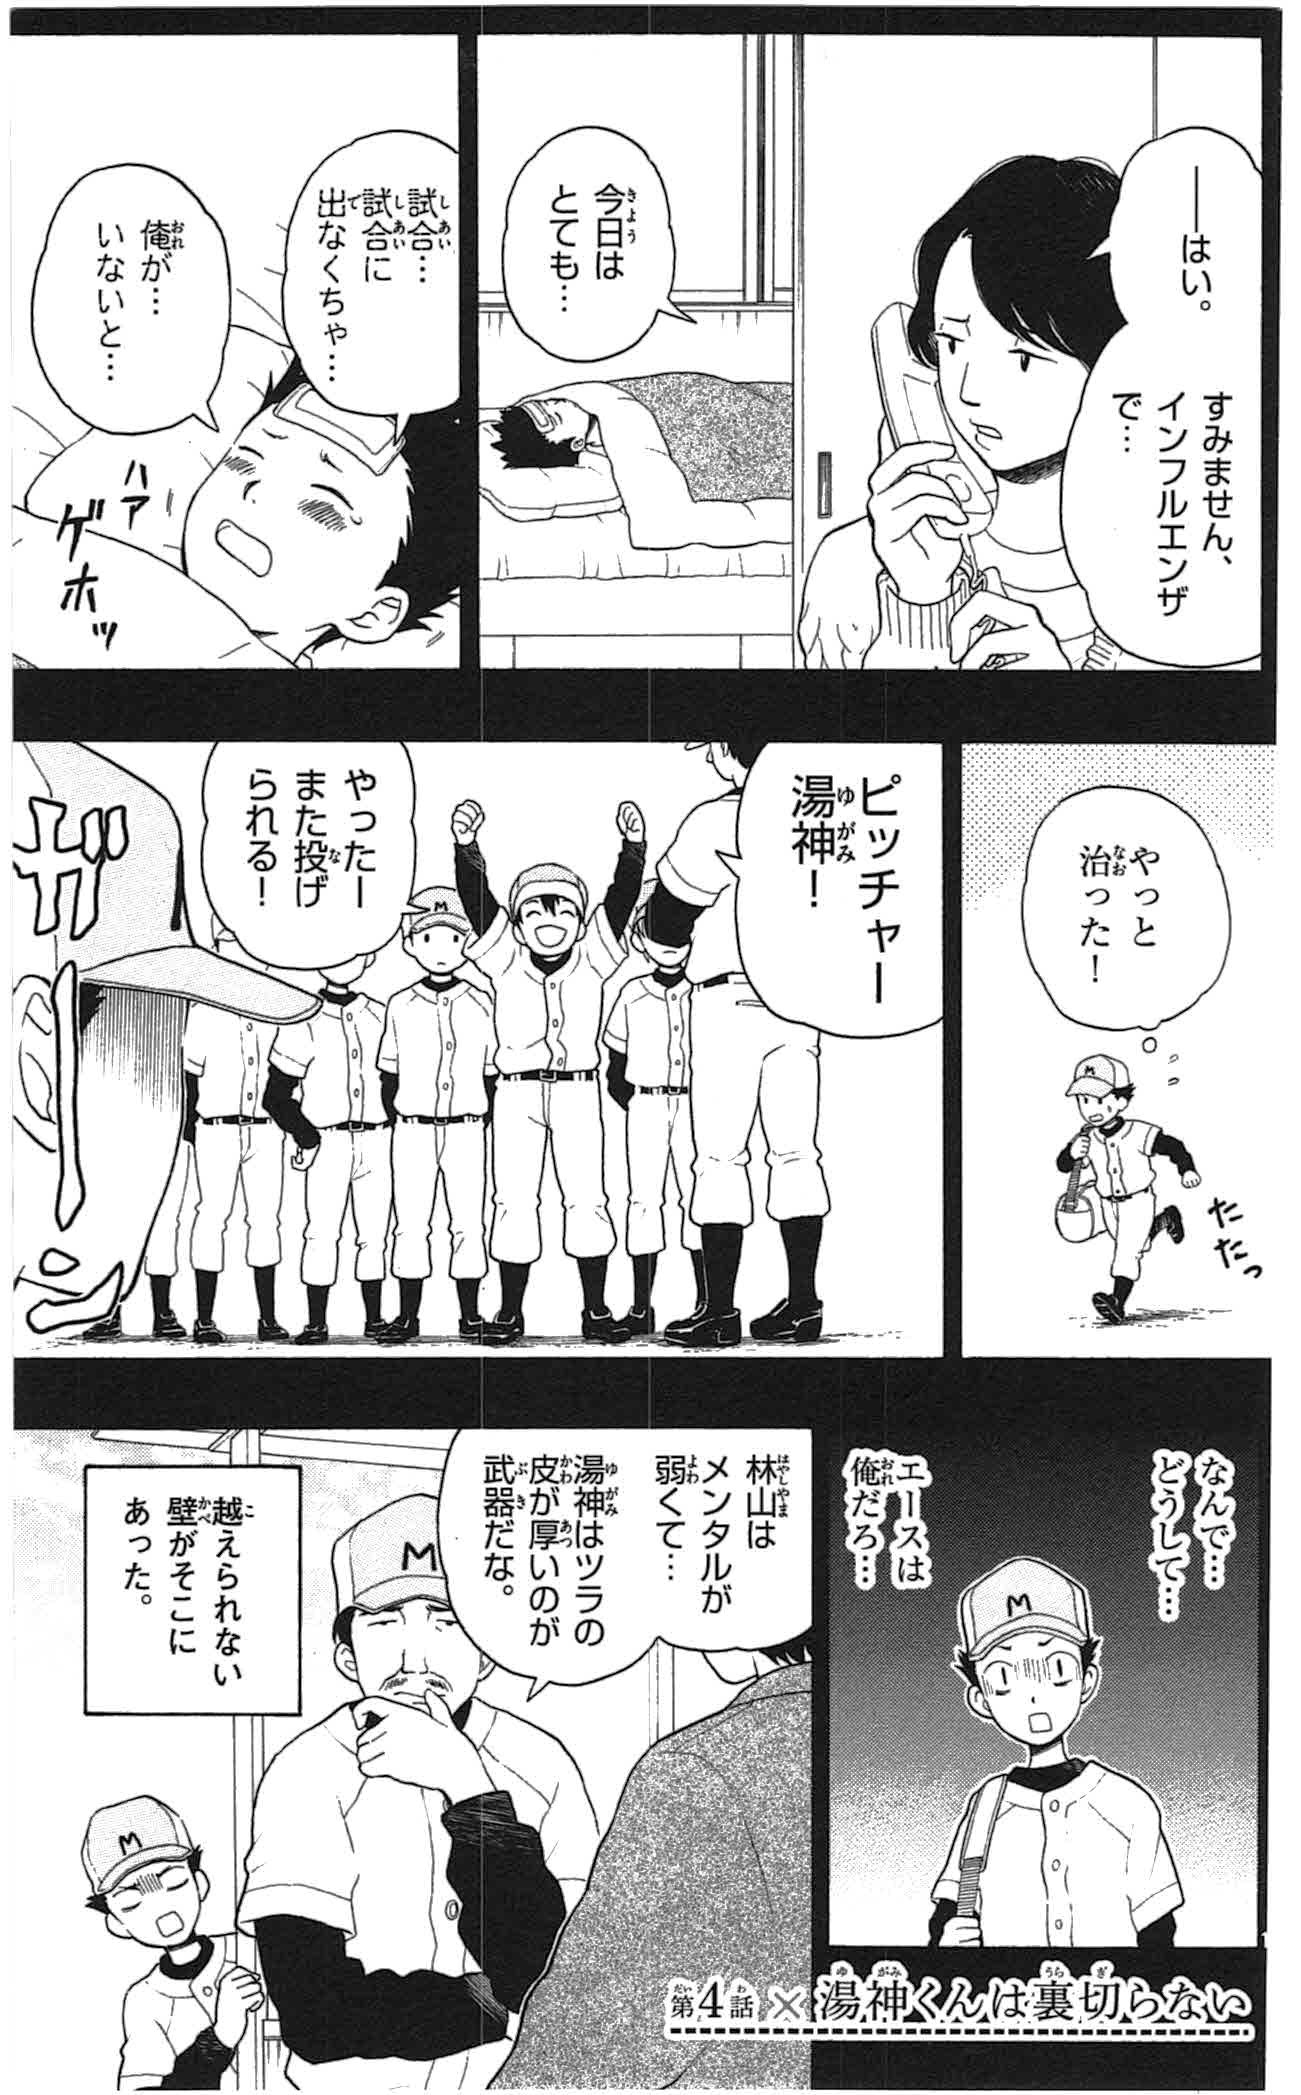 Yugami-kun ni wa Tomodachi ga Inai - Chapter 004 - Page 1